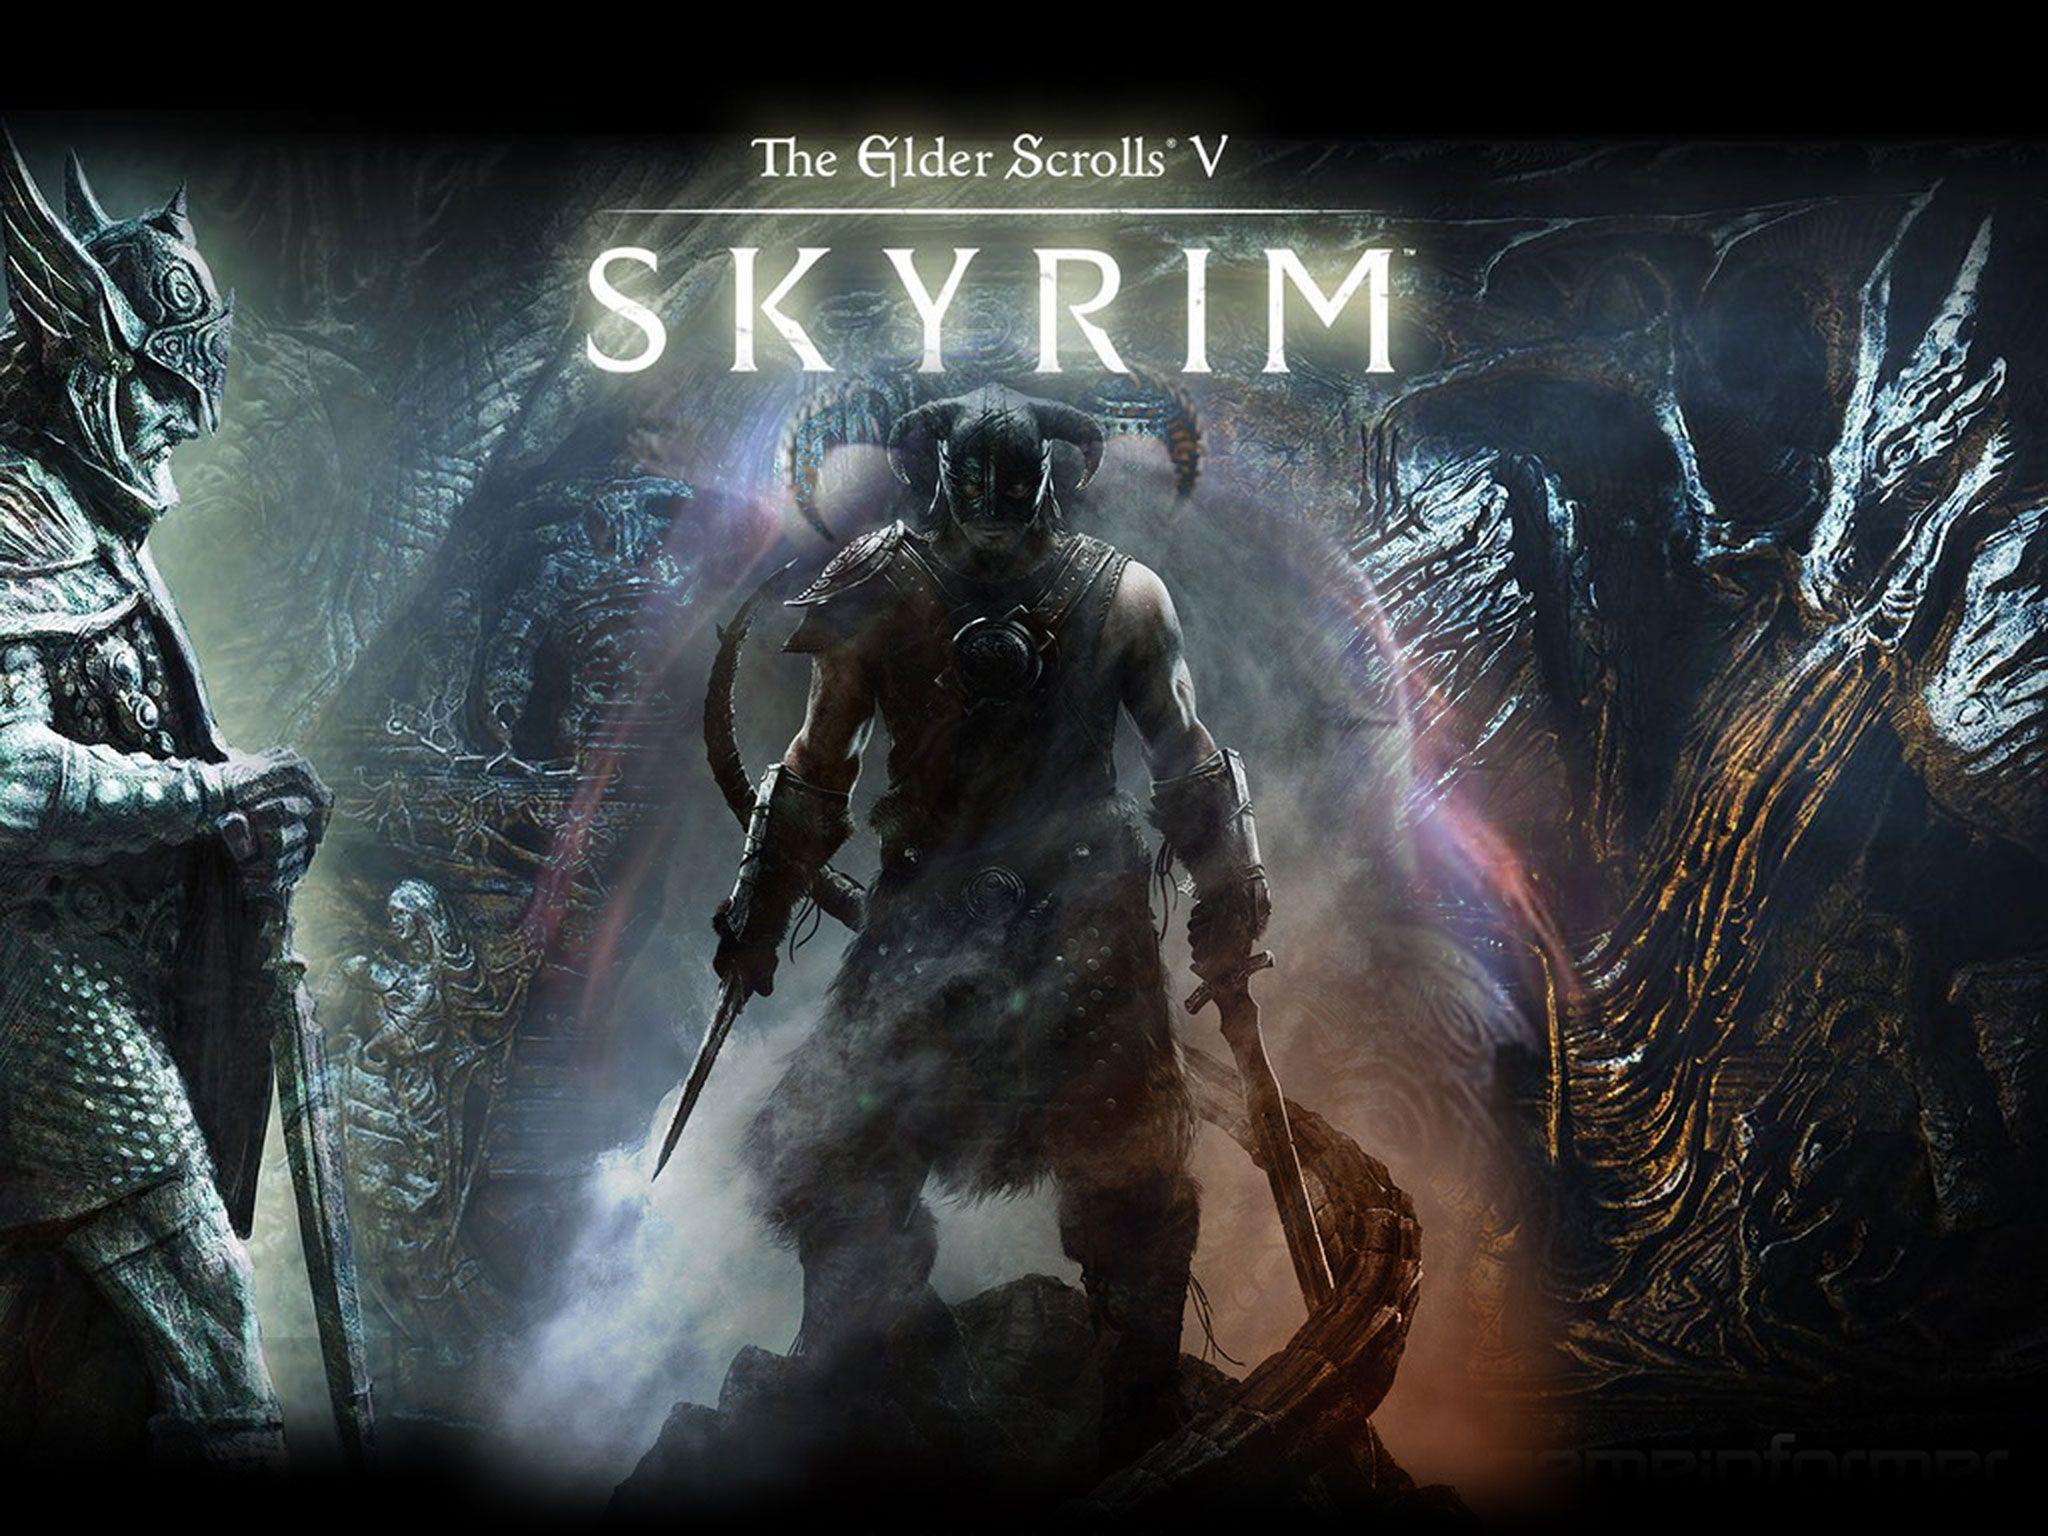 Video Game The Elder Scrolls V: Skyrim wallpaper Desktop, Phone